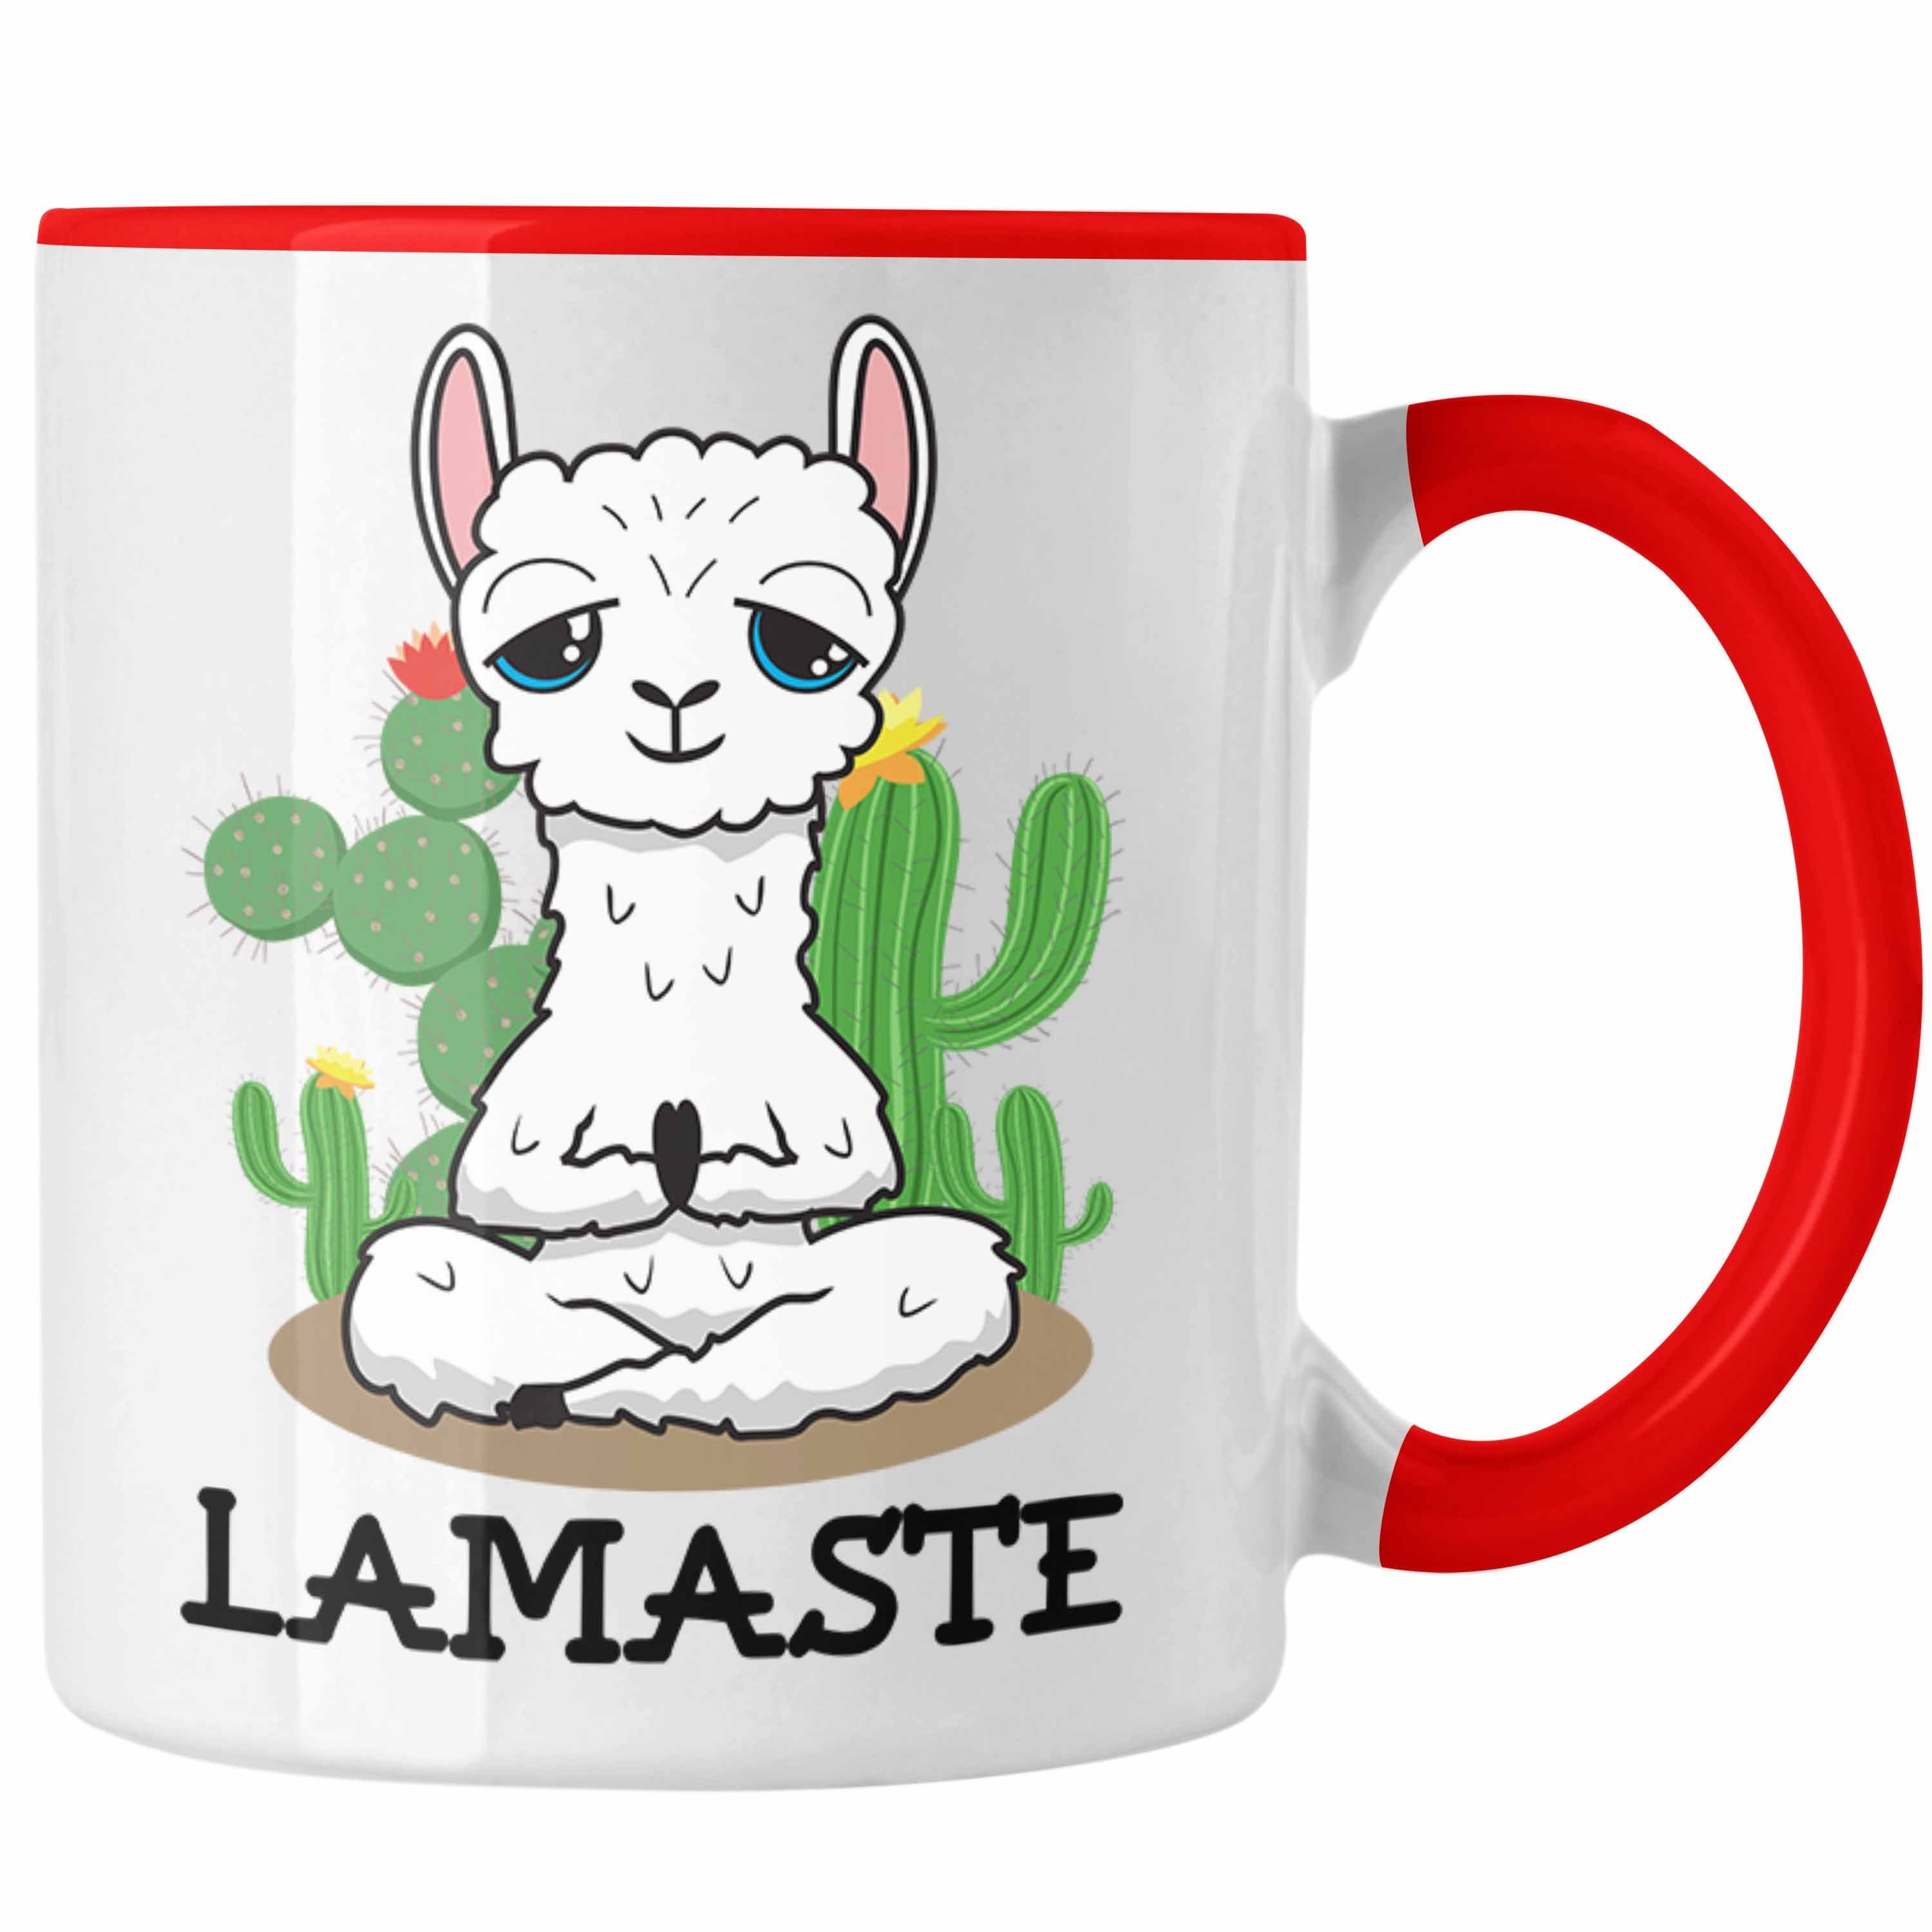 Trendation Lamaste Tasse Llama Sport Lama Sport Yoga-Posen Yoga Geschenk - Lustig Geschenkidee Rot Trendation Tasse